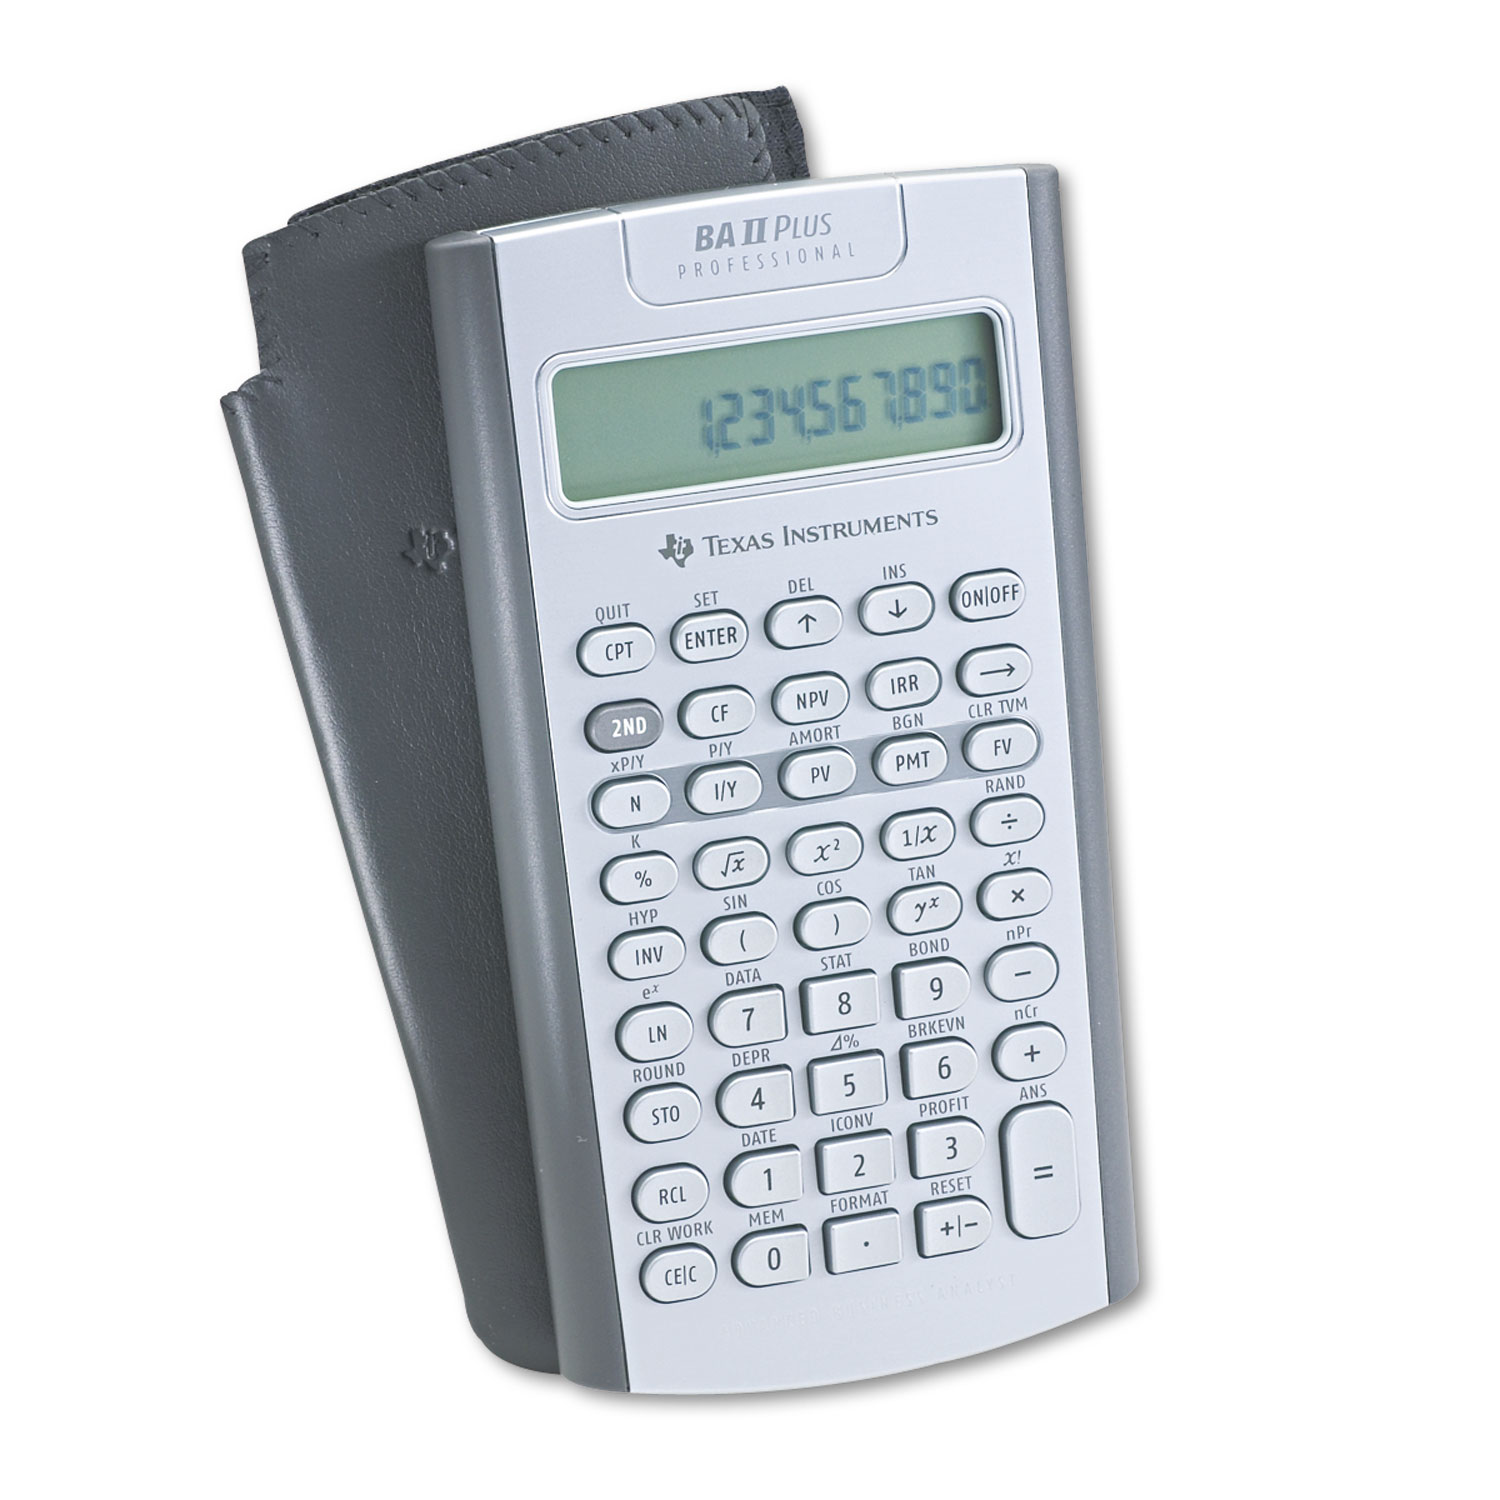  Texas Instruments BA-II PRO BAIIPlus PRO Financial Calculator, 10-Digit LCD (TEXBAIIPLUSPRO) 